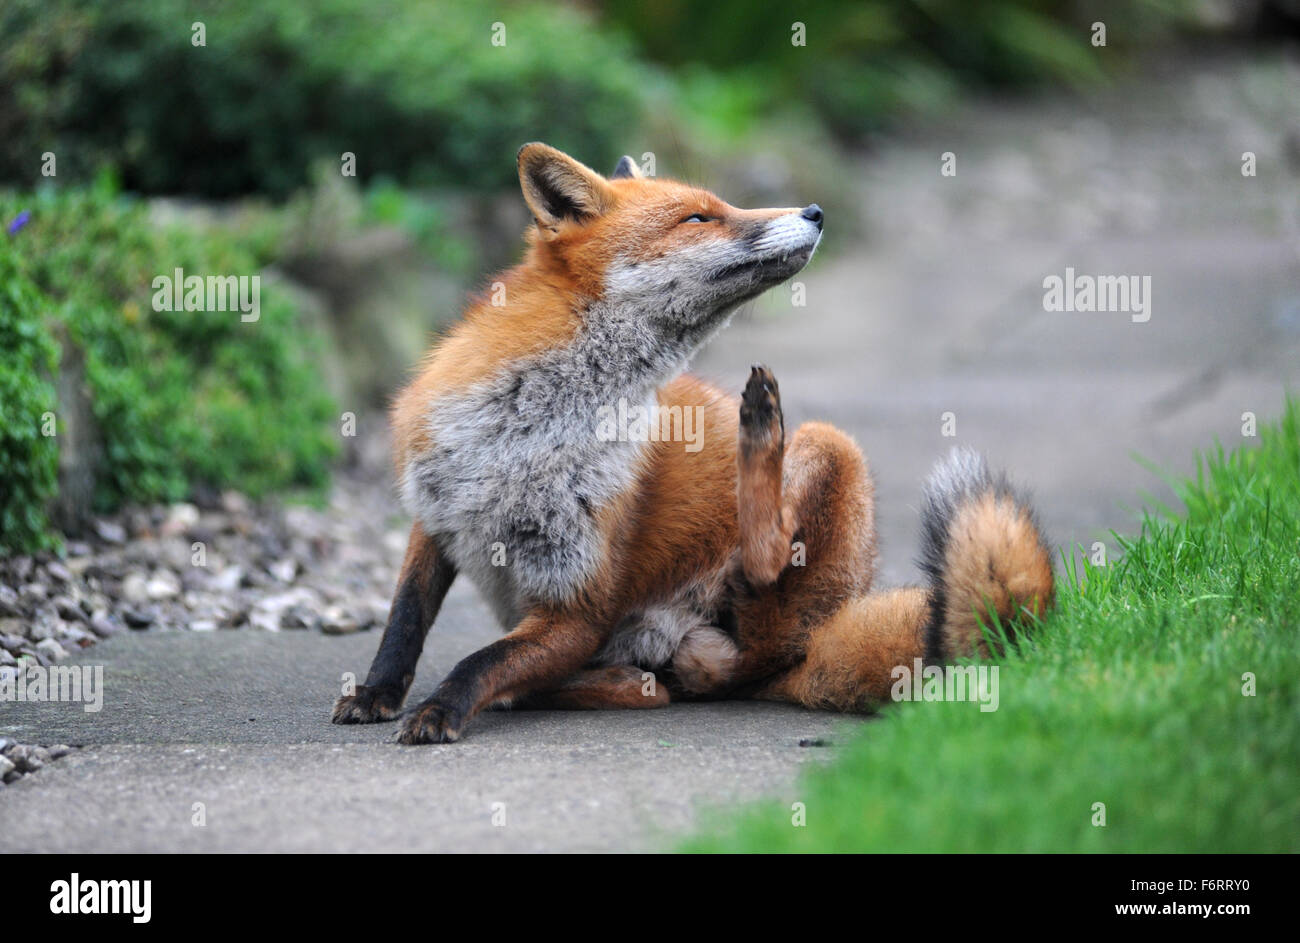 WILD URBAN FOX RE WILDLIFE ANIMAL GARDEN TOWN CITY PESTS GROWLING BARKING SCRATCHING FLEAS FEEDING FOOD SCAVENGING CLOSE UP UK Stock Photo